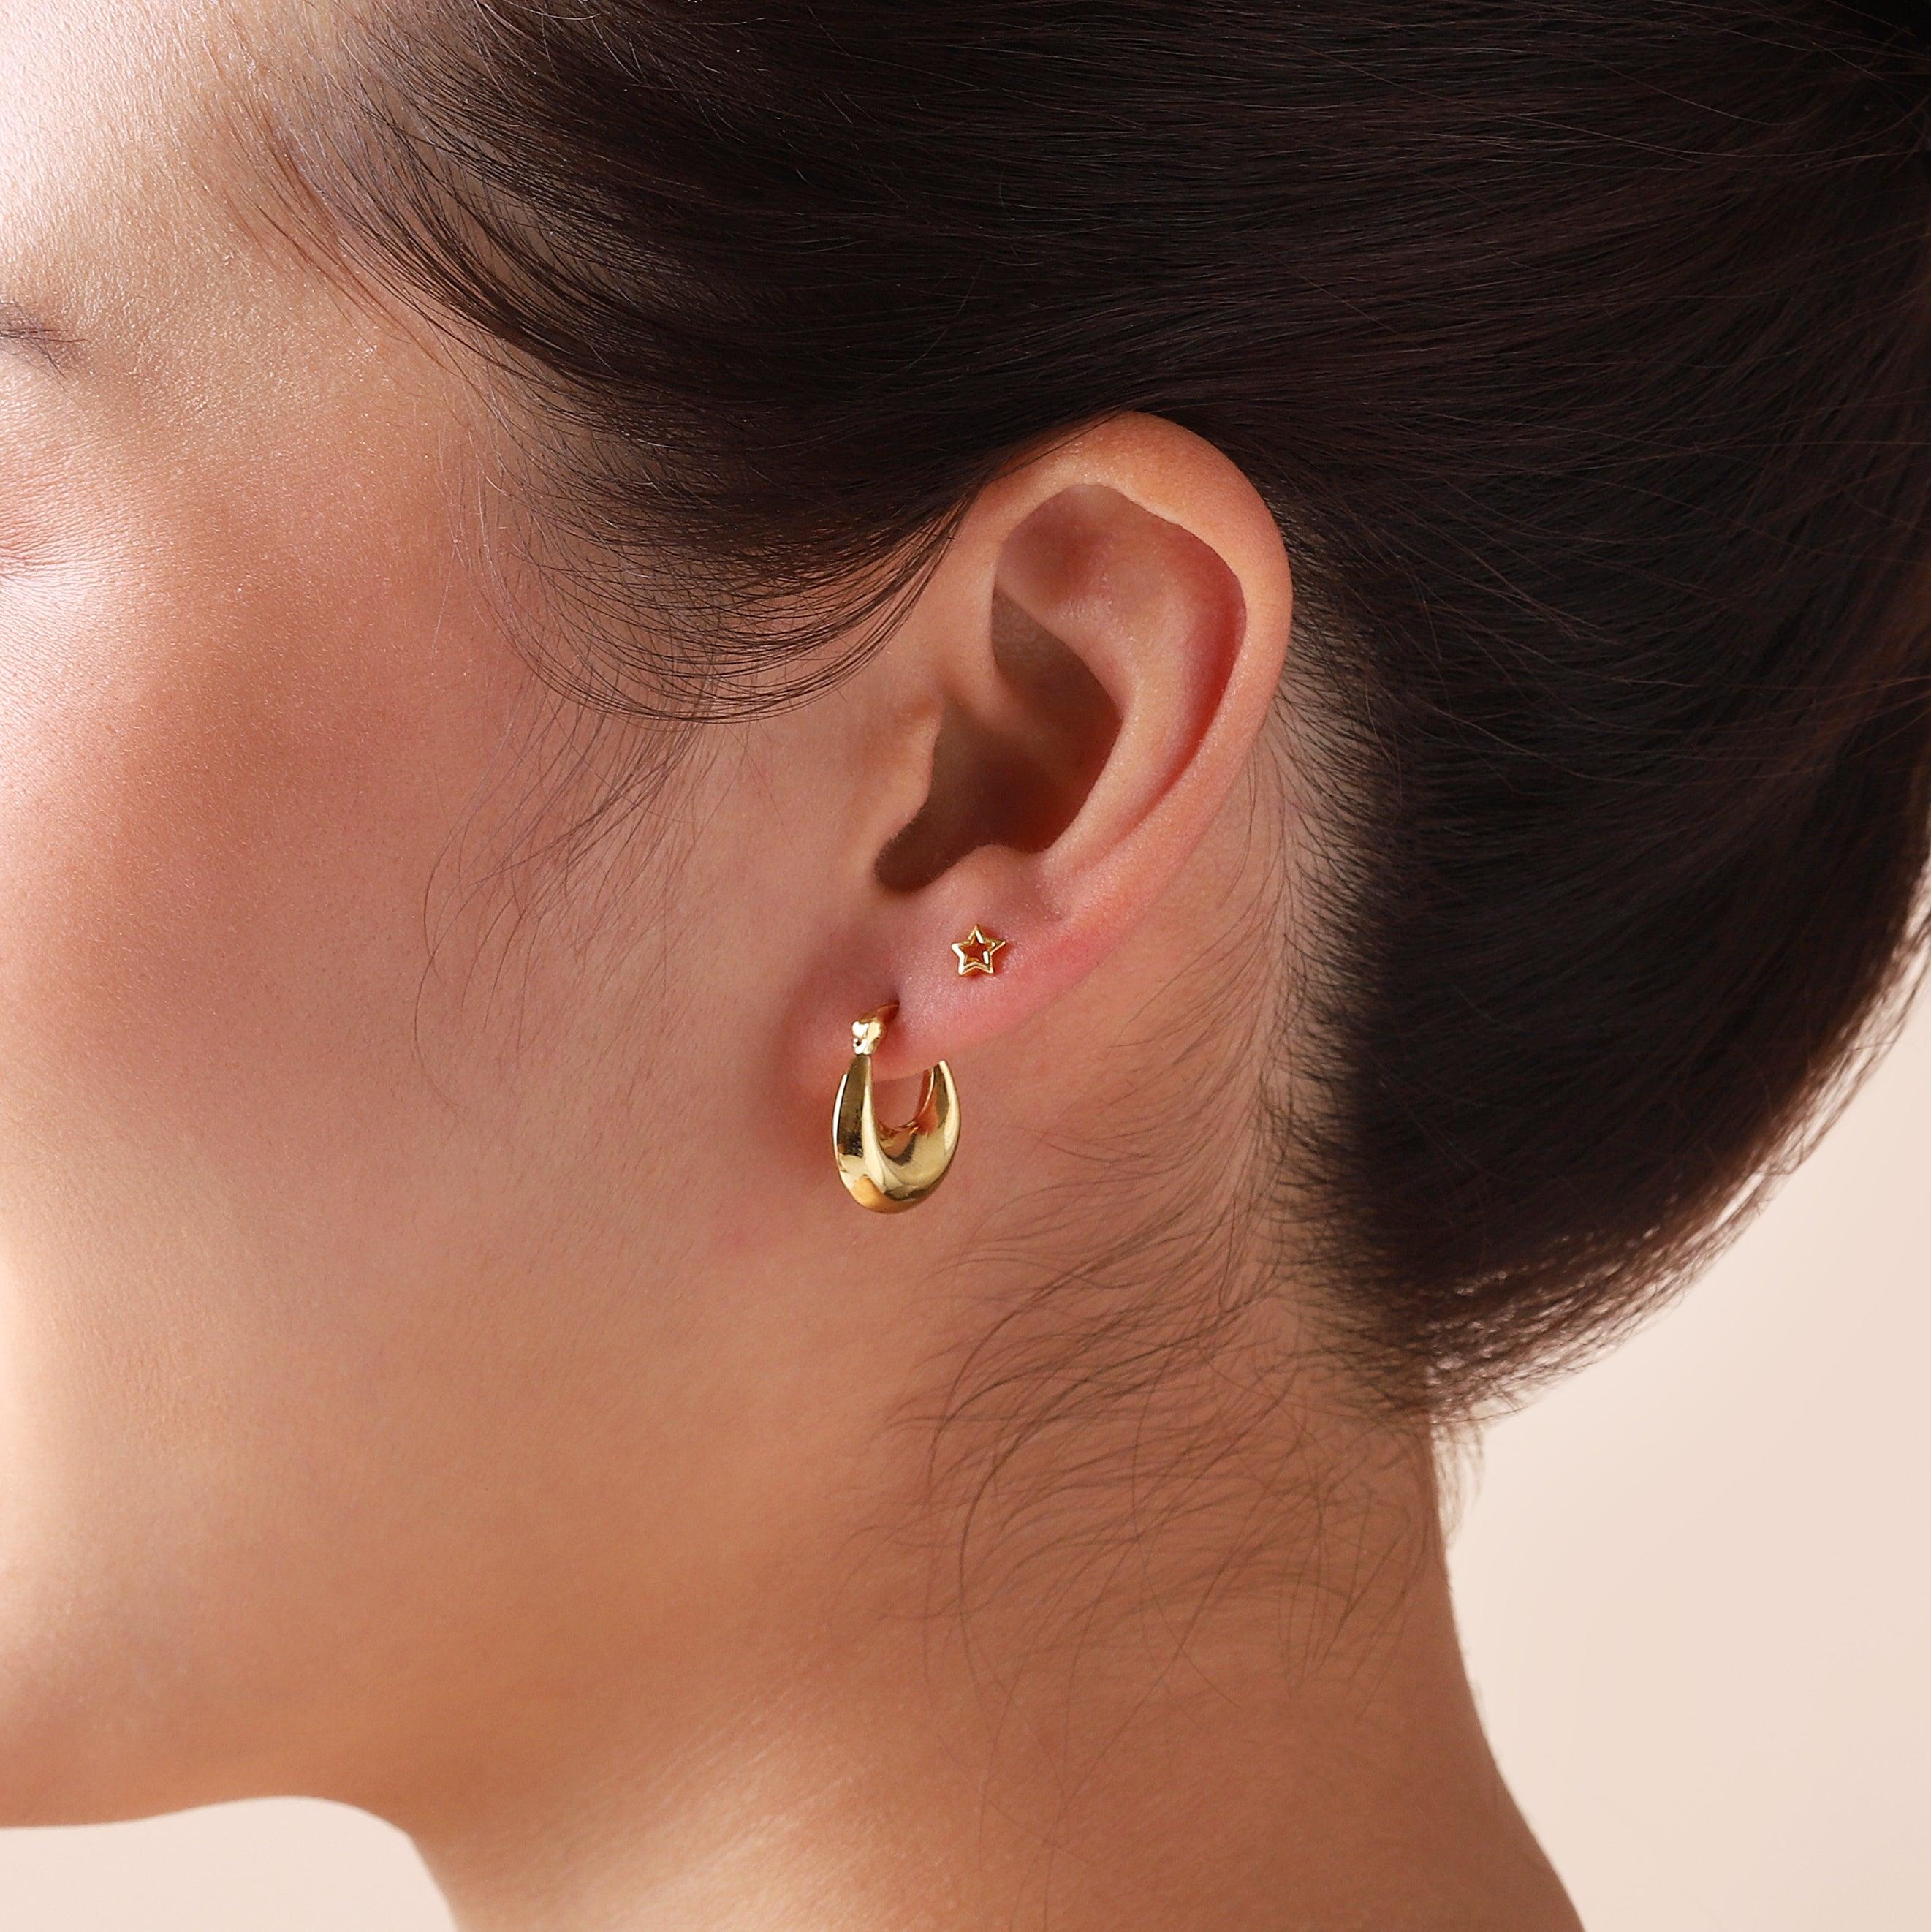 gold plated open star stud earrings on model